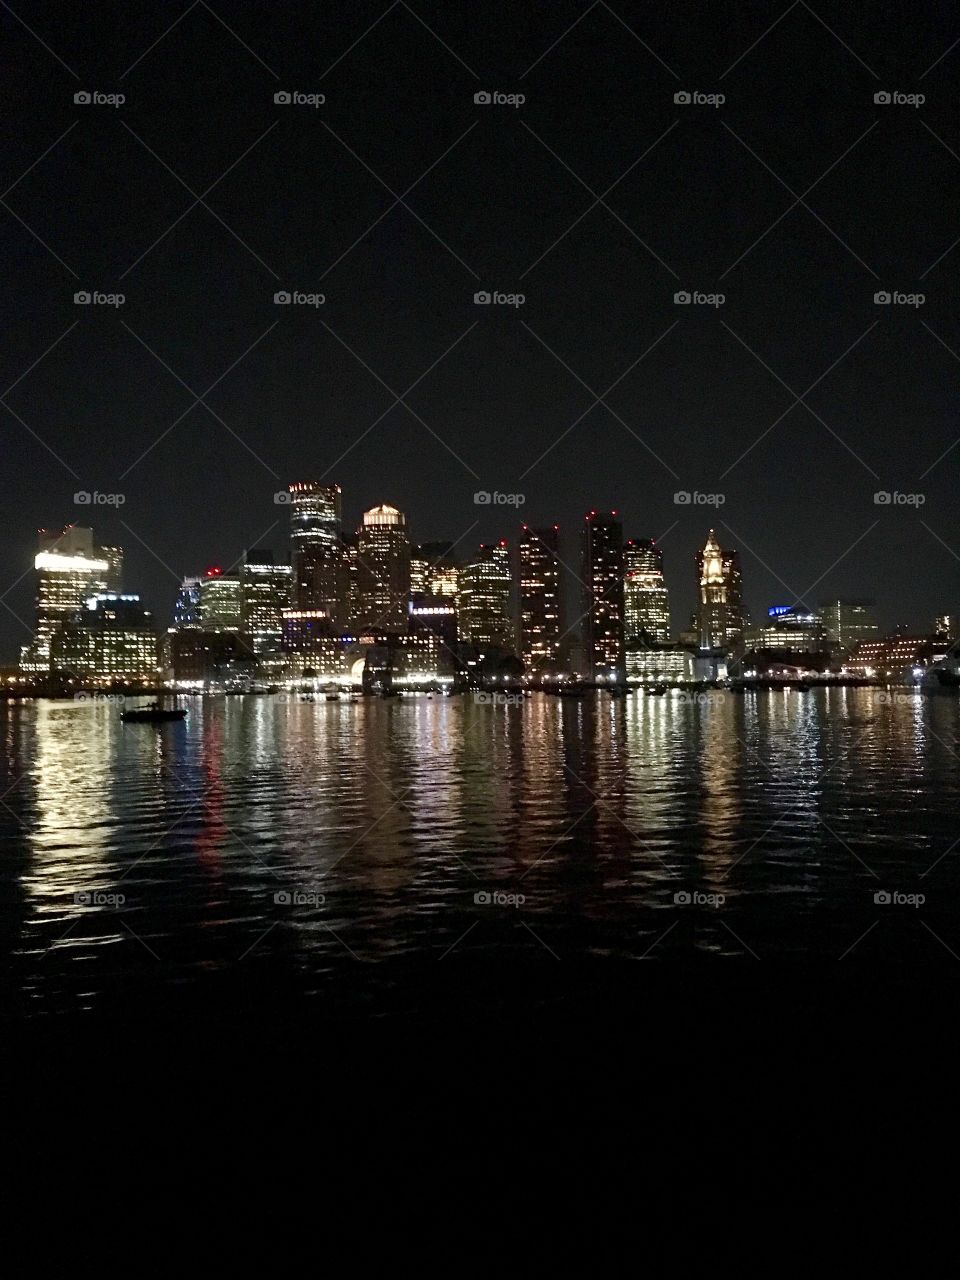 Moonlight cruise in Boston Harbor